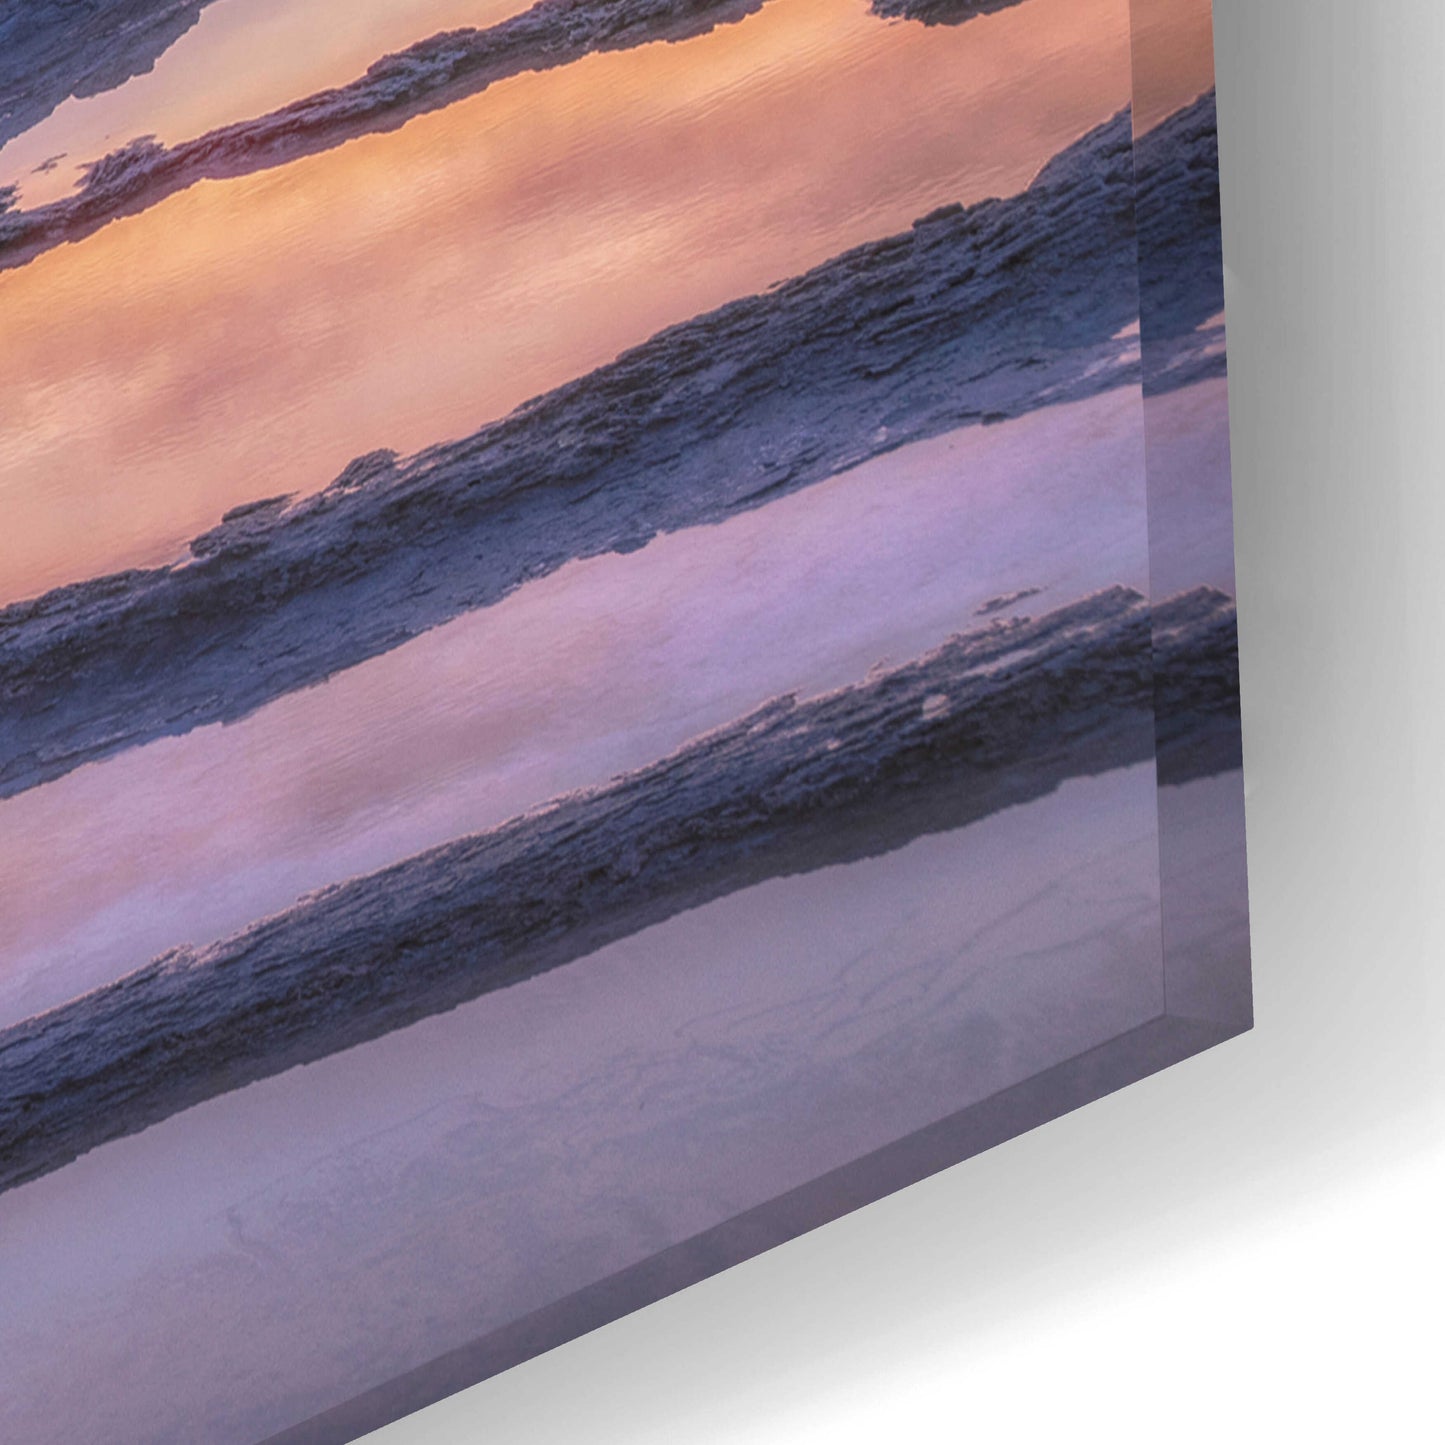 Epic Art 'Great Sunset - Grand Teton National Park' by Darren White, Acrylic Glass Wall Art,24x16